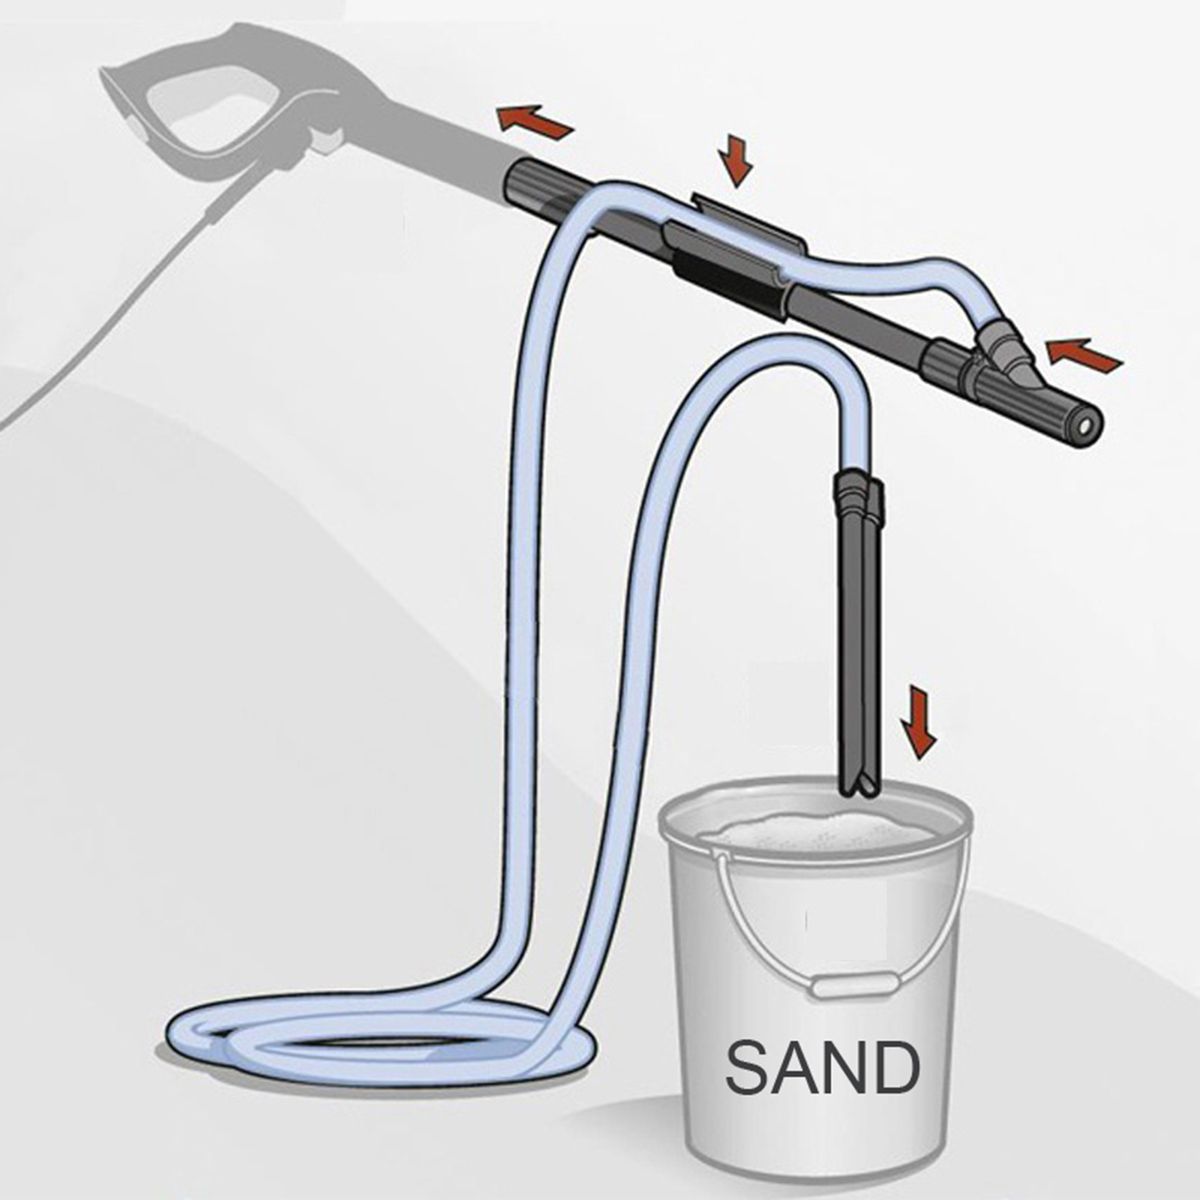 3m-Tube-Sand-Wet-Pressure-Washer-Sand-Blasting-Kit-For-Nilfisk-STIHL-1359397